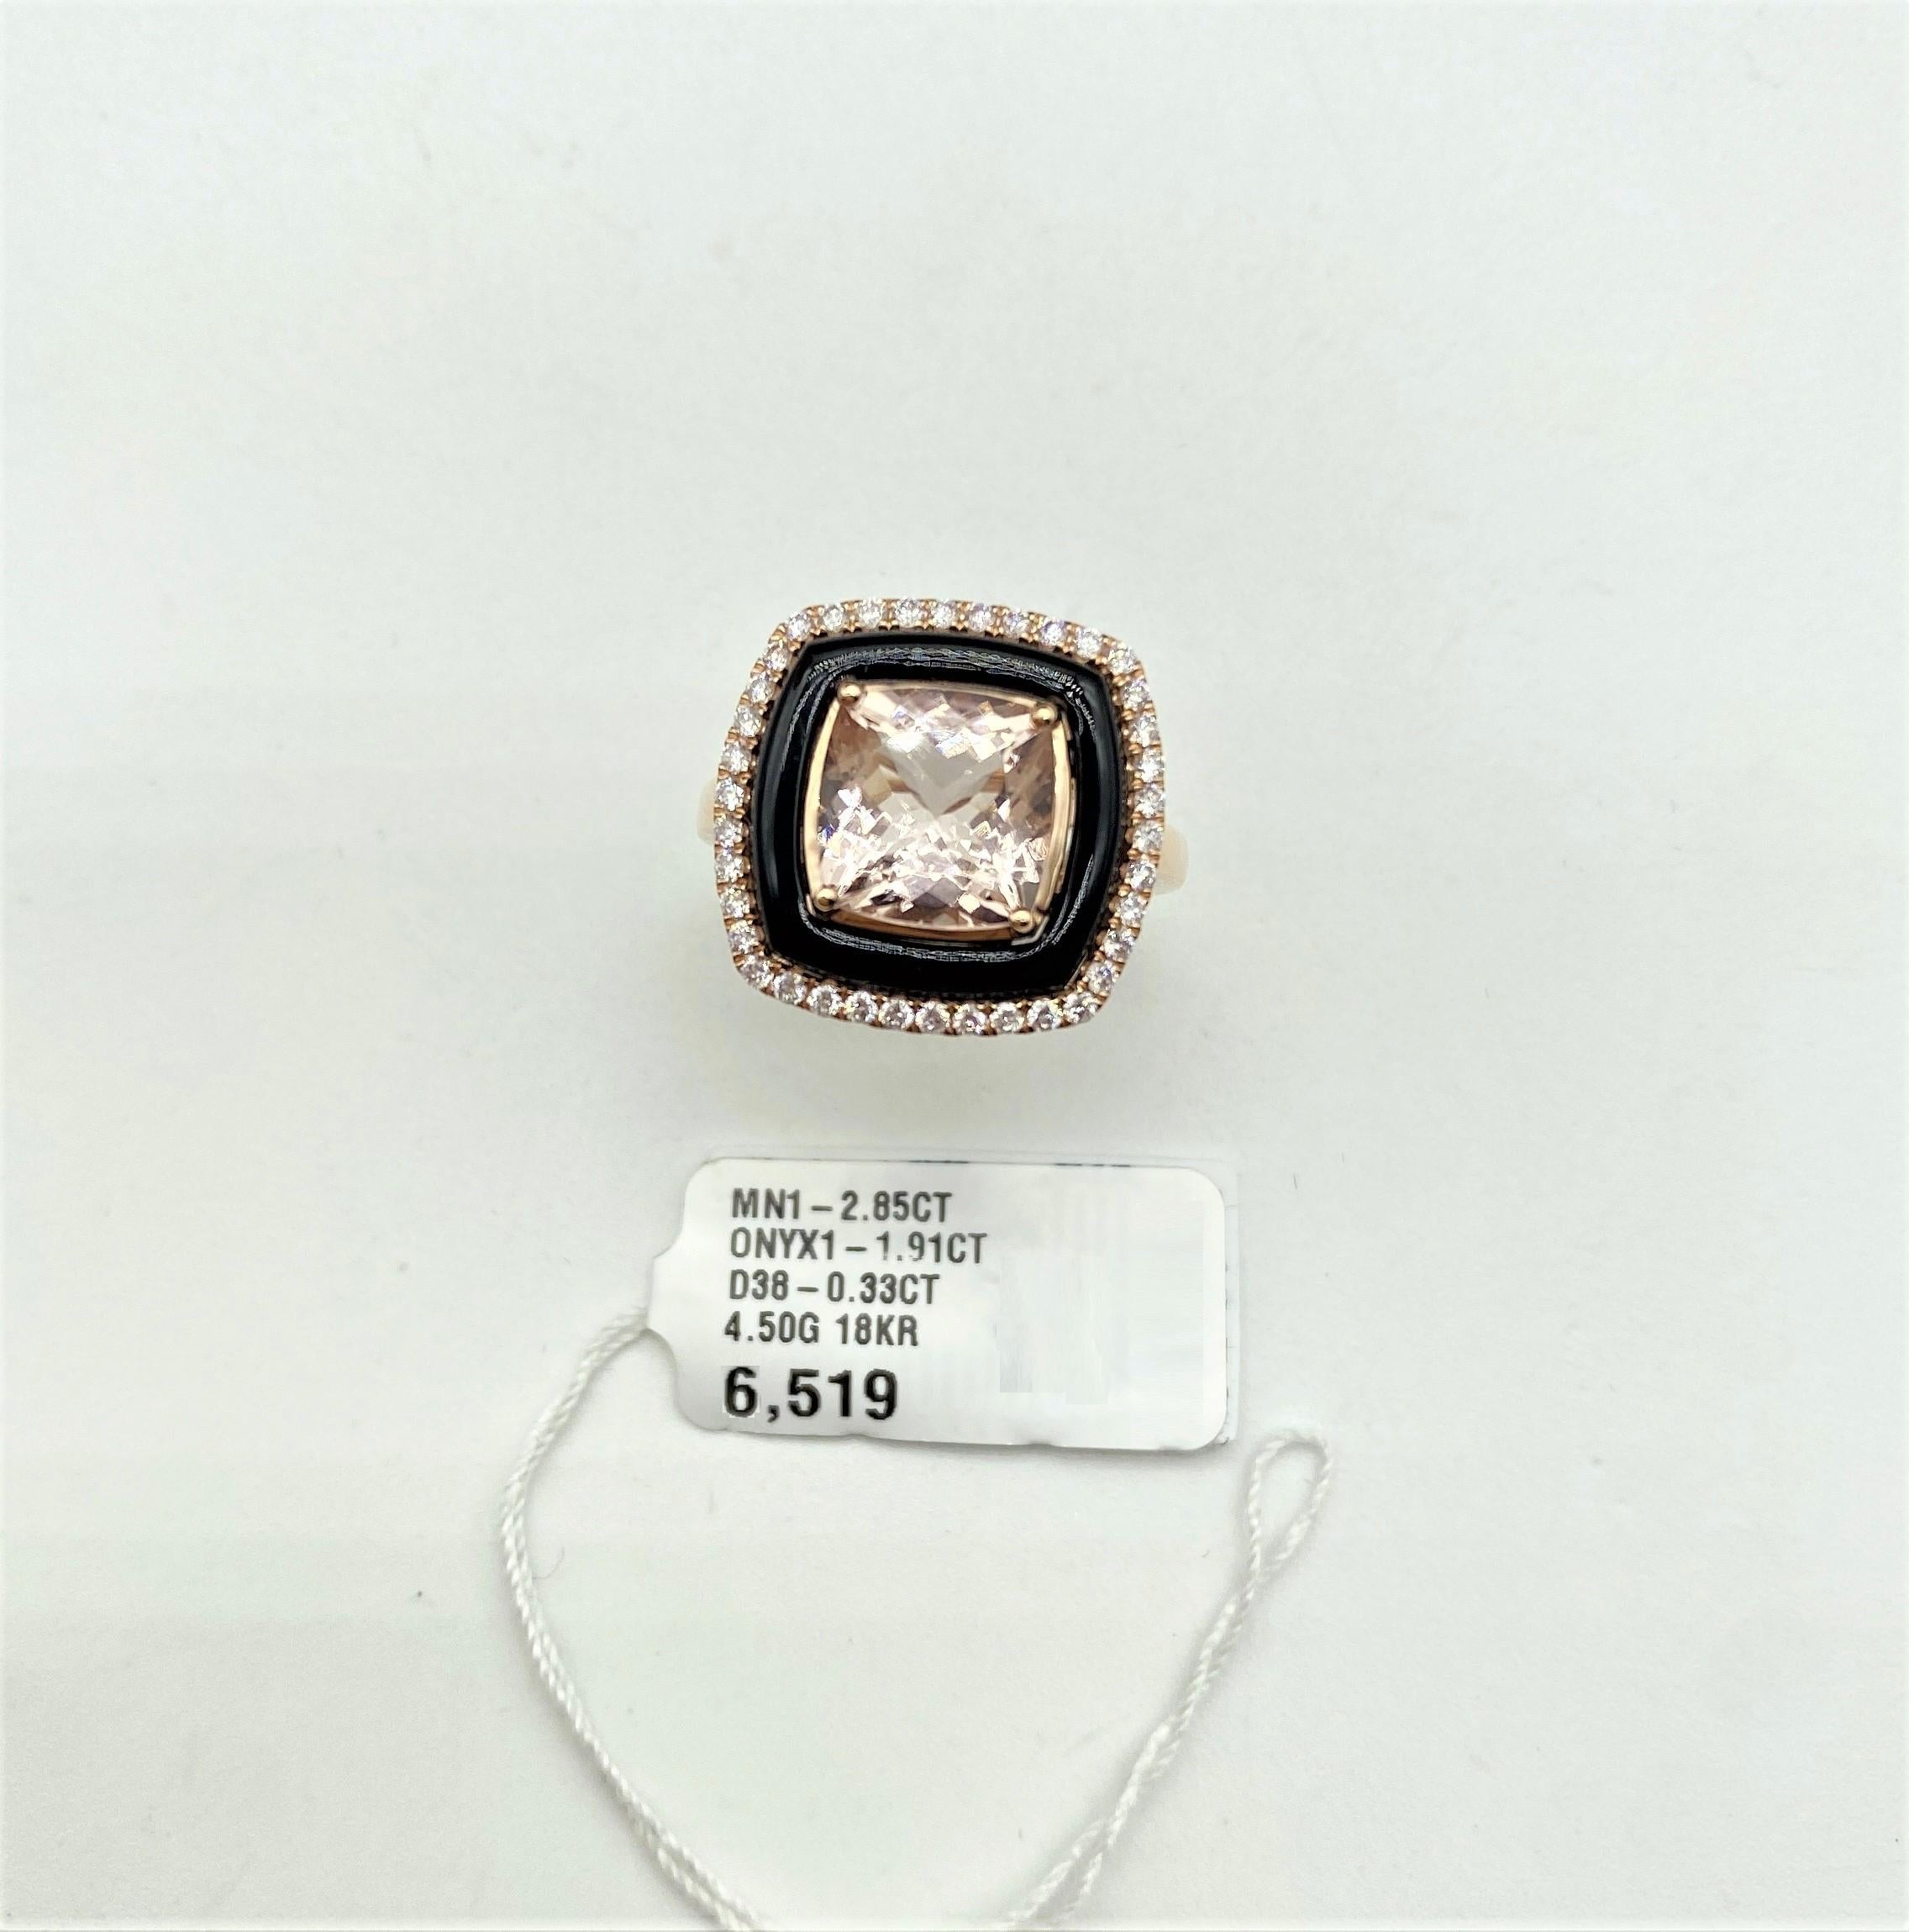 NEU $6, 519 18KT Fancy Großer glitzernder Fancy Morganit und Diamant Onyx-Ring, Neu mit Diamanten im Zustand „Neu“ im Angebot in New York, NY